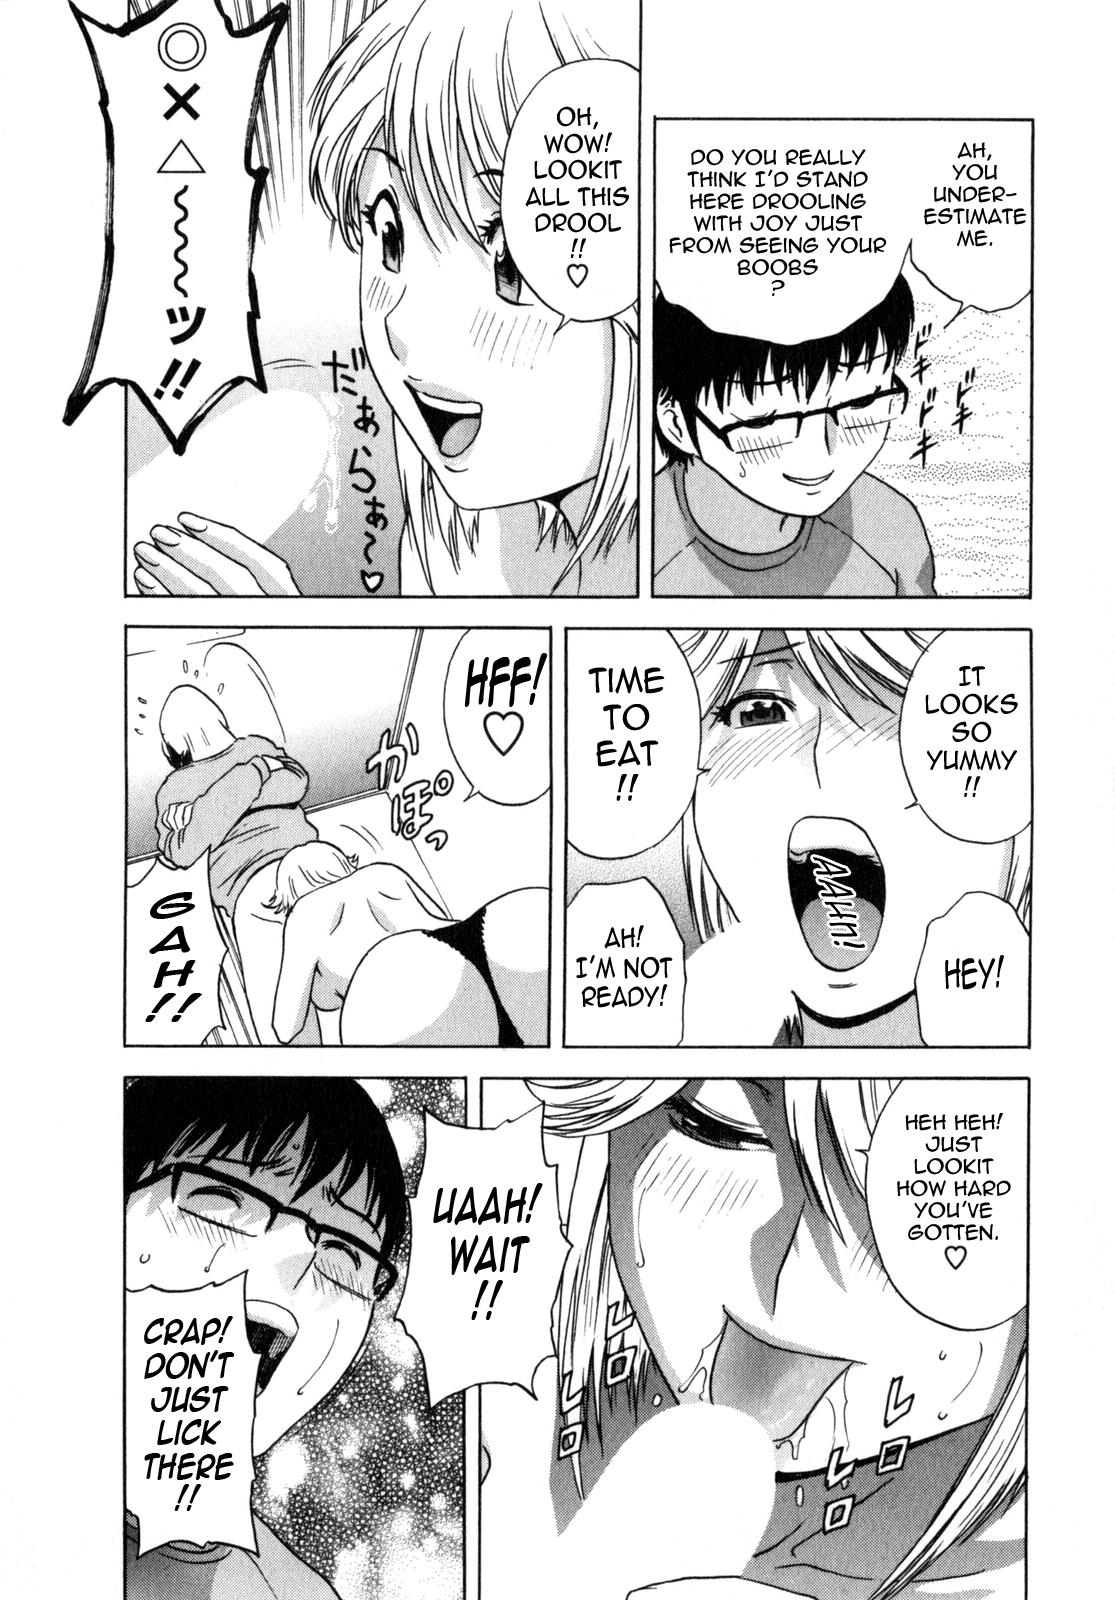 [Hidemaru] Life with Married Women Just Like a Manga 1 - Ch. 1-8 [English] {Tadanohito} 33